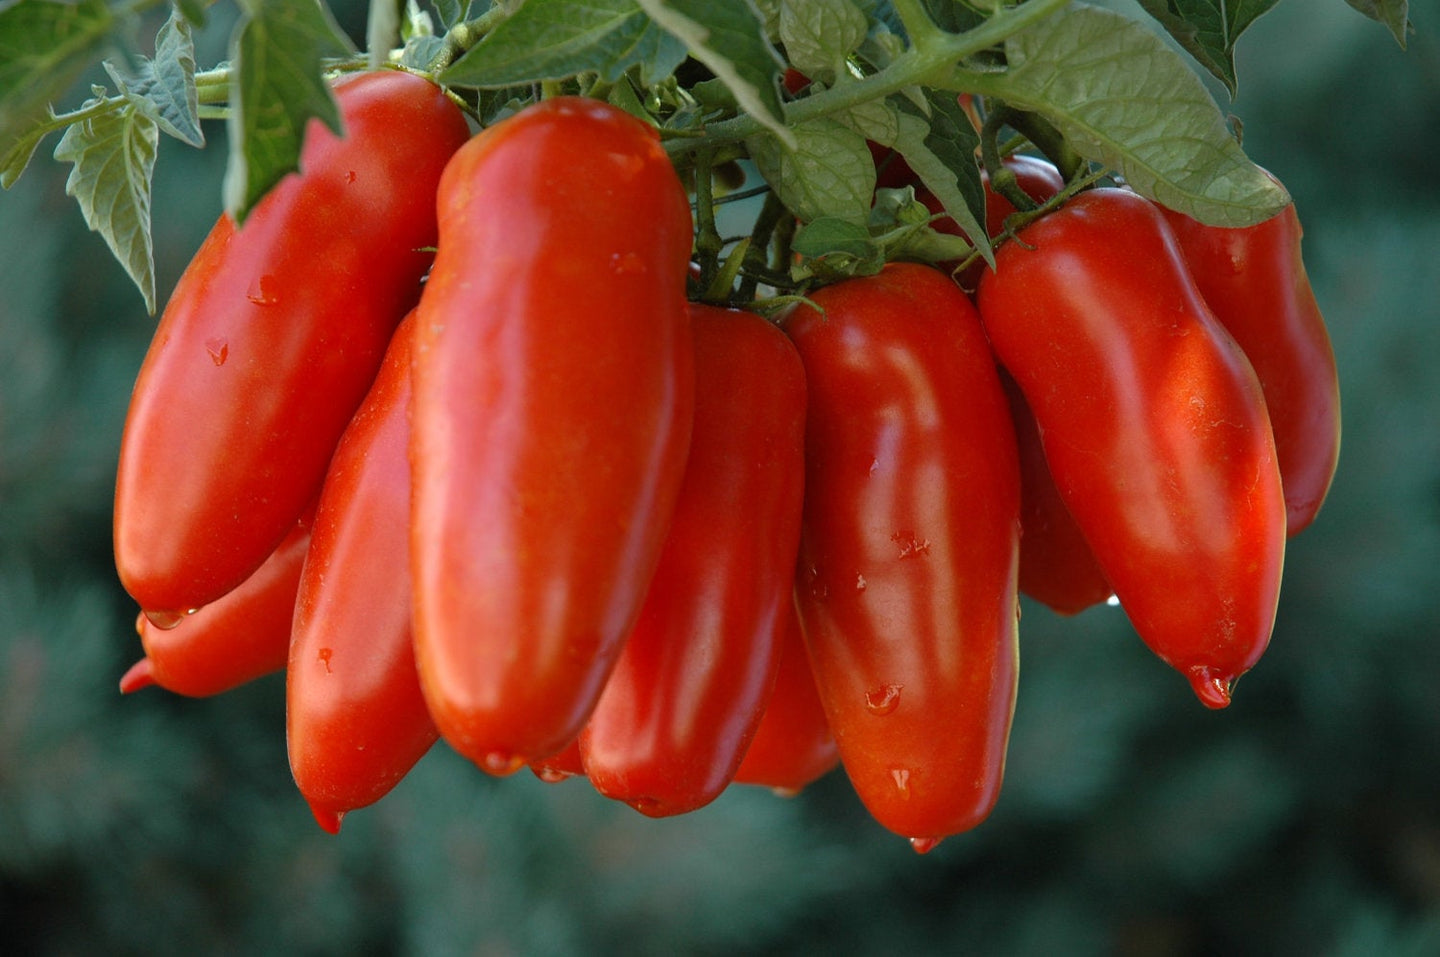 Buy Online High Quality Heirloom San Marzano Tomato Seeds, Organic, An Old Italian Tomato, | Buy Rare, And Extraordinary Heirloom Seeds - Seeds to Cherish